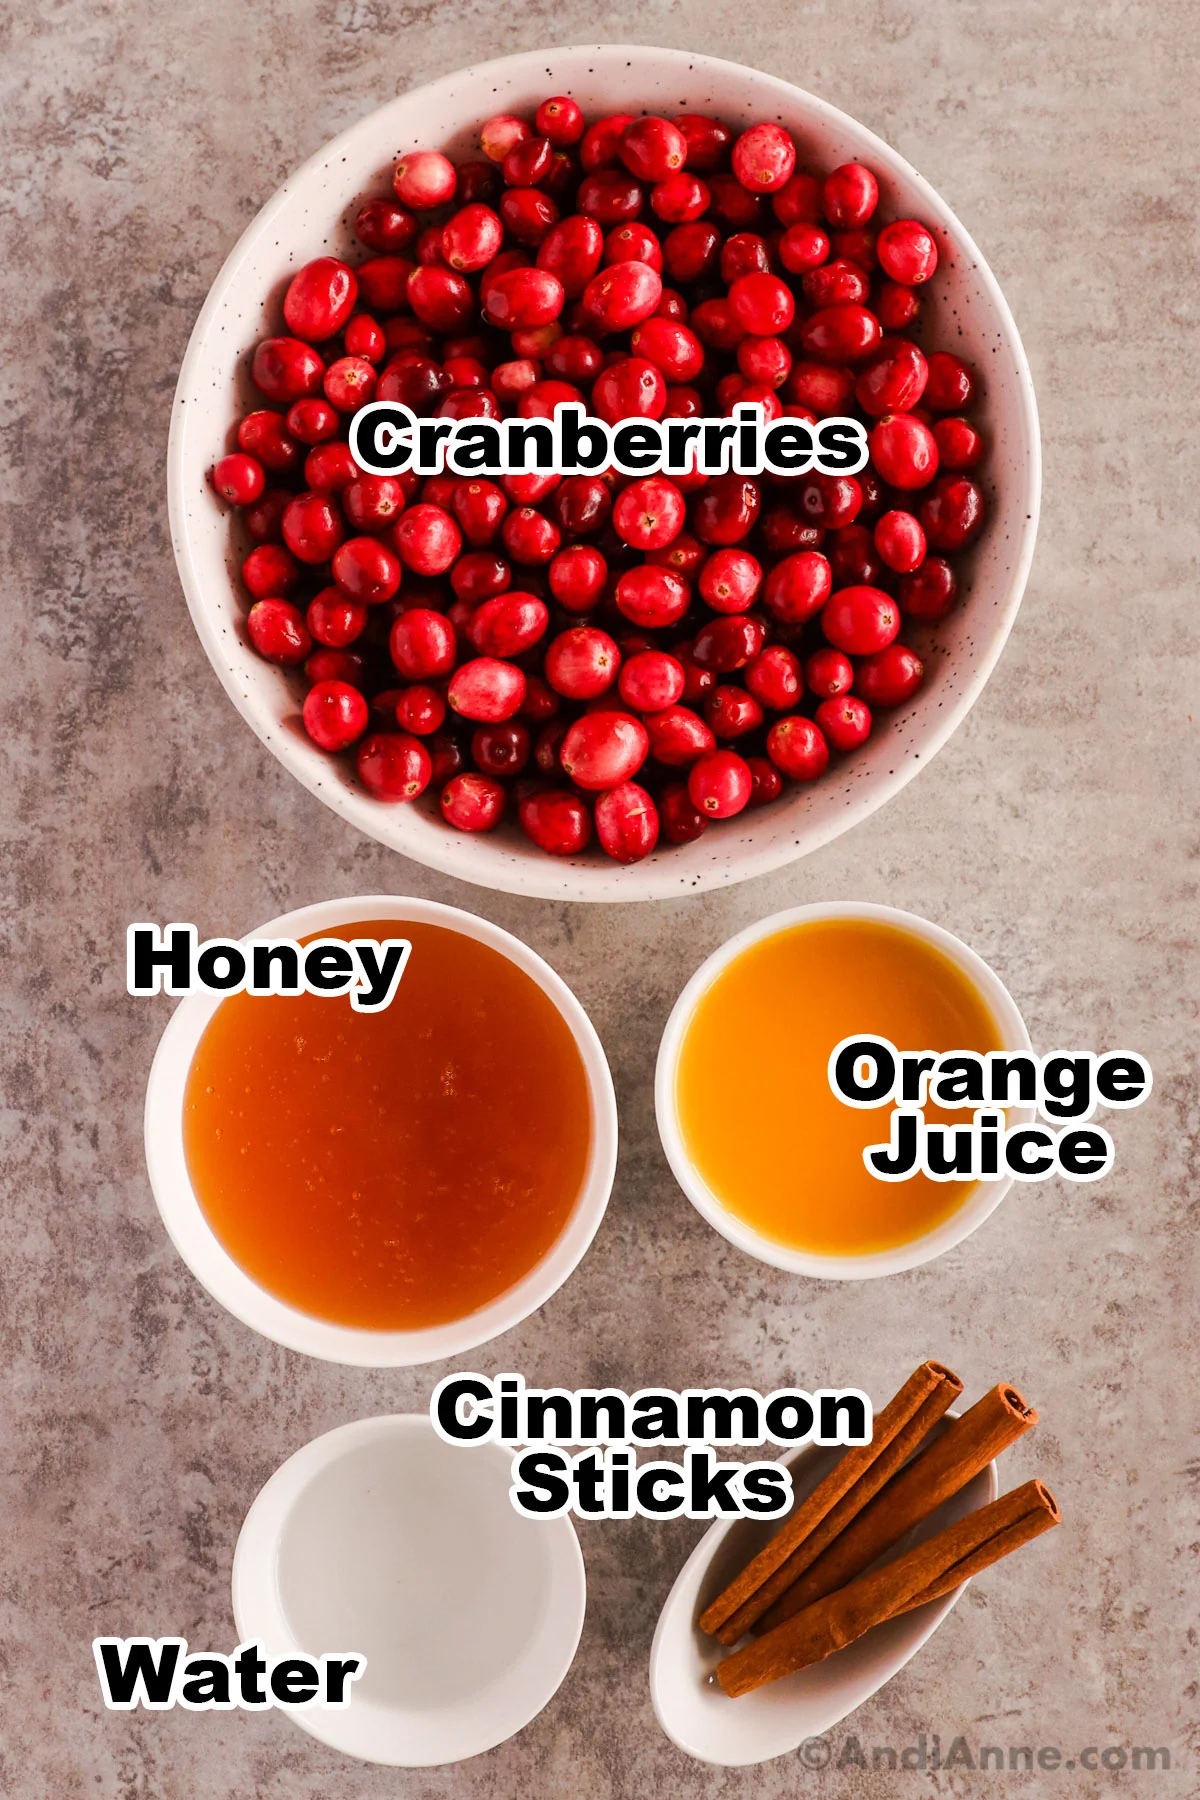 Bowls of fresh cranberries, honey, orange juice, water and cinnamon sticks.